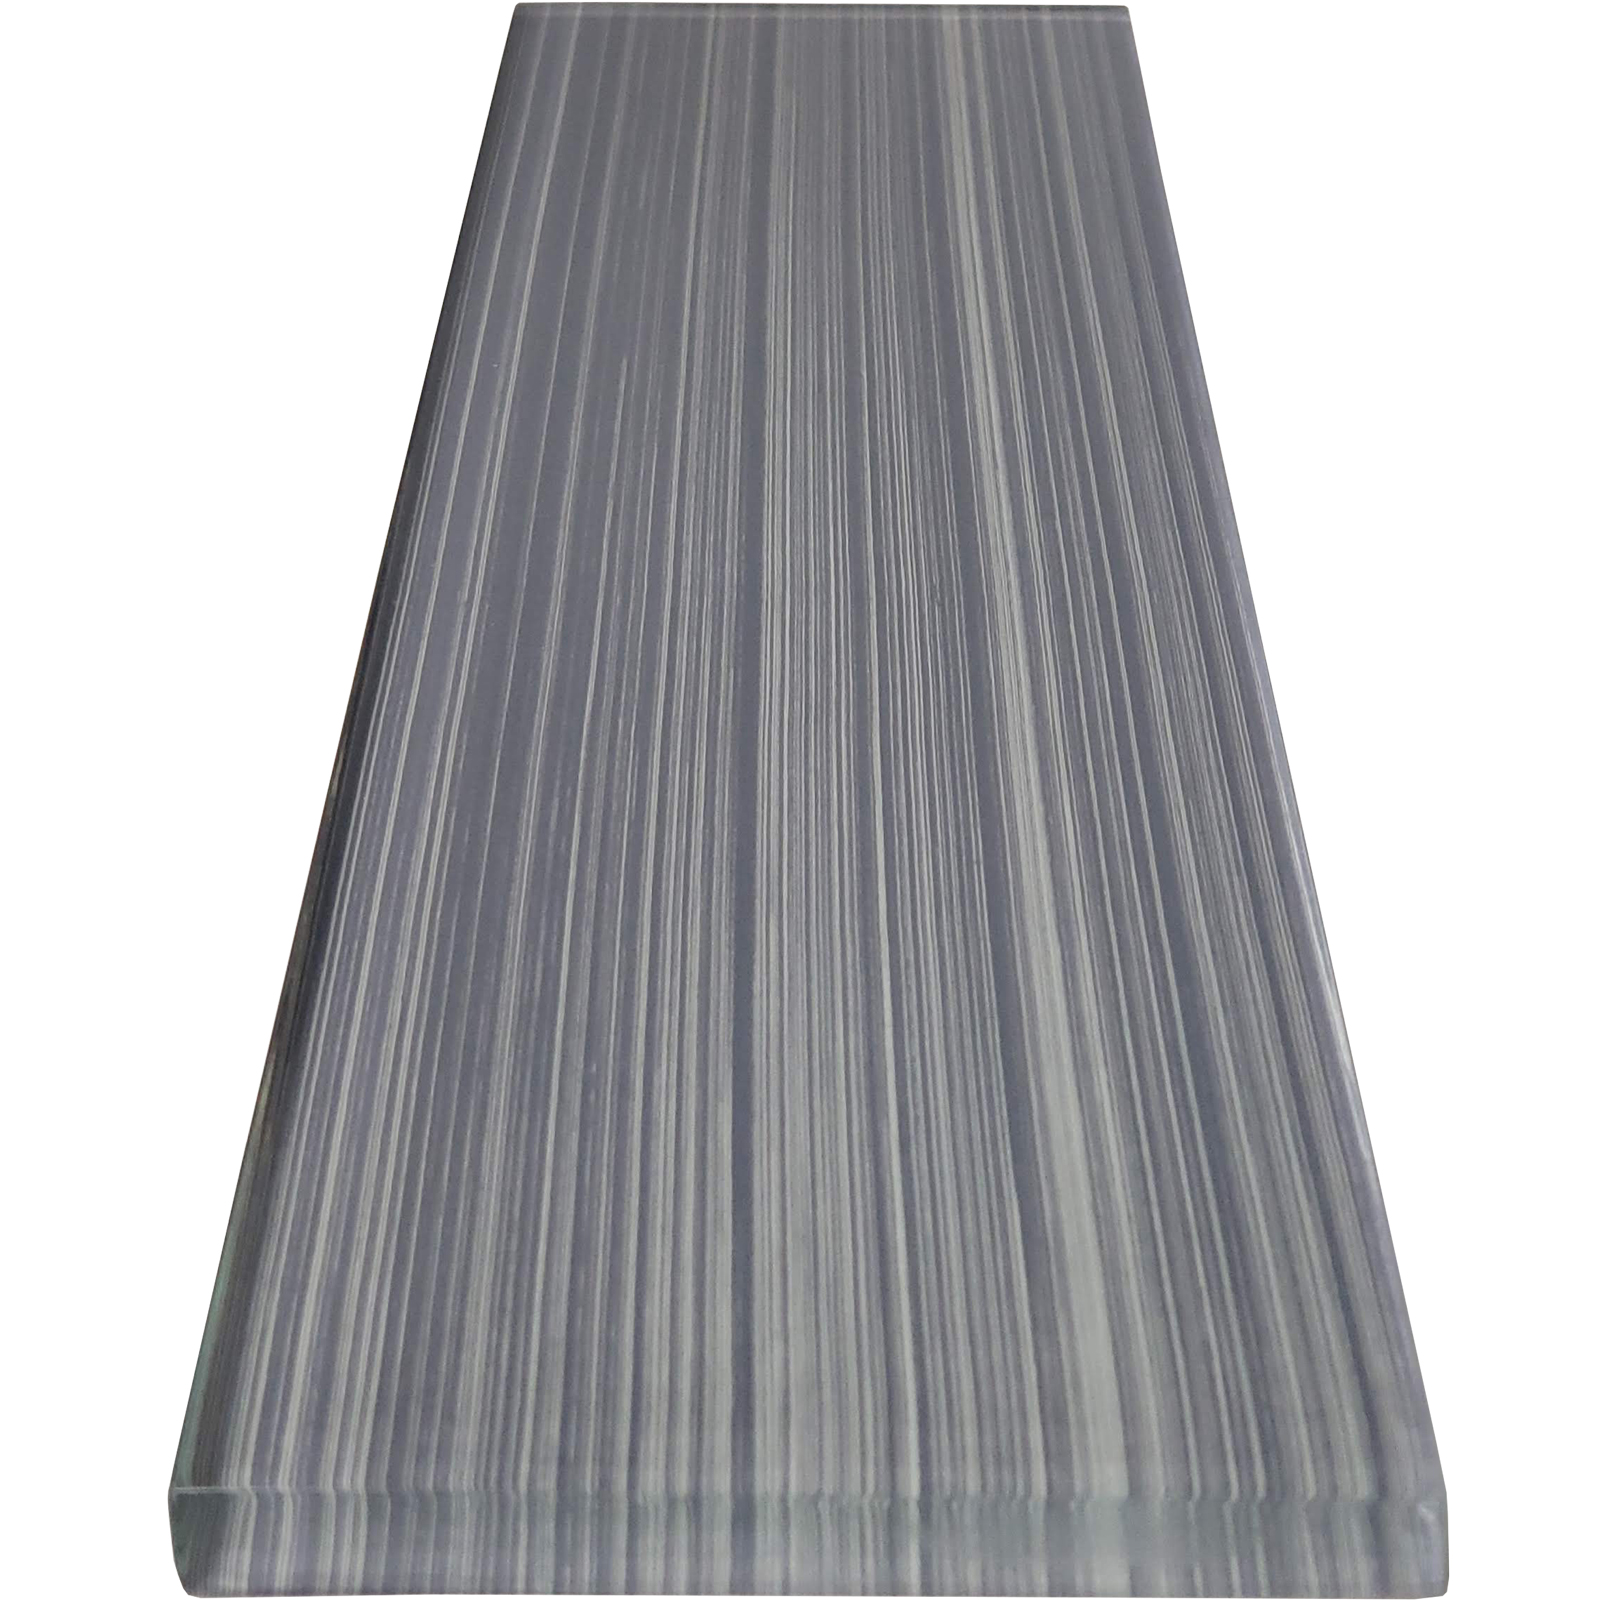 3x12 Ocean Bamboo Grey Glass Tile  